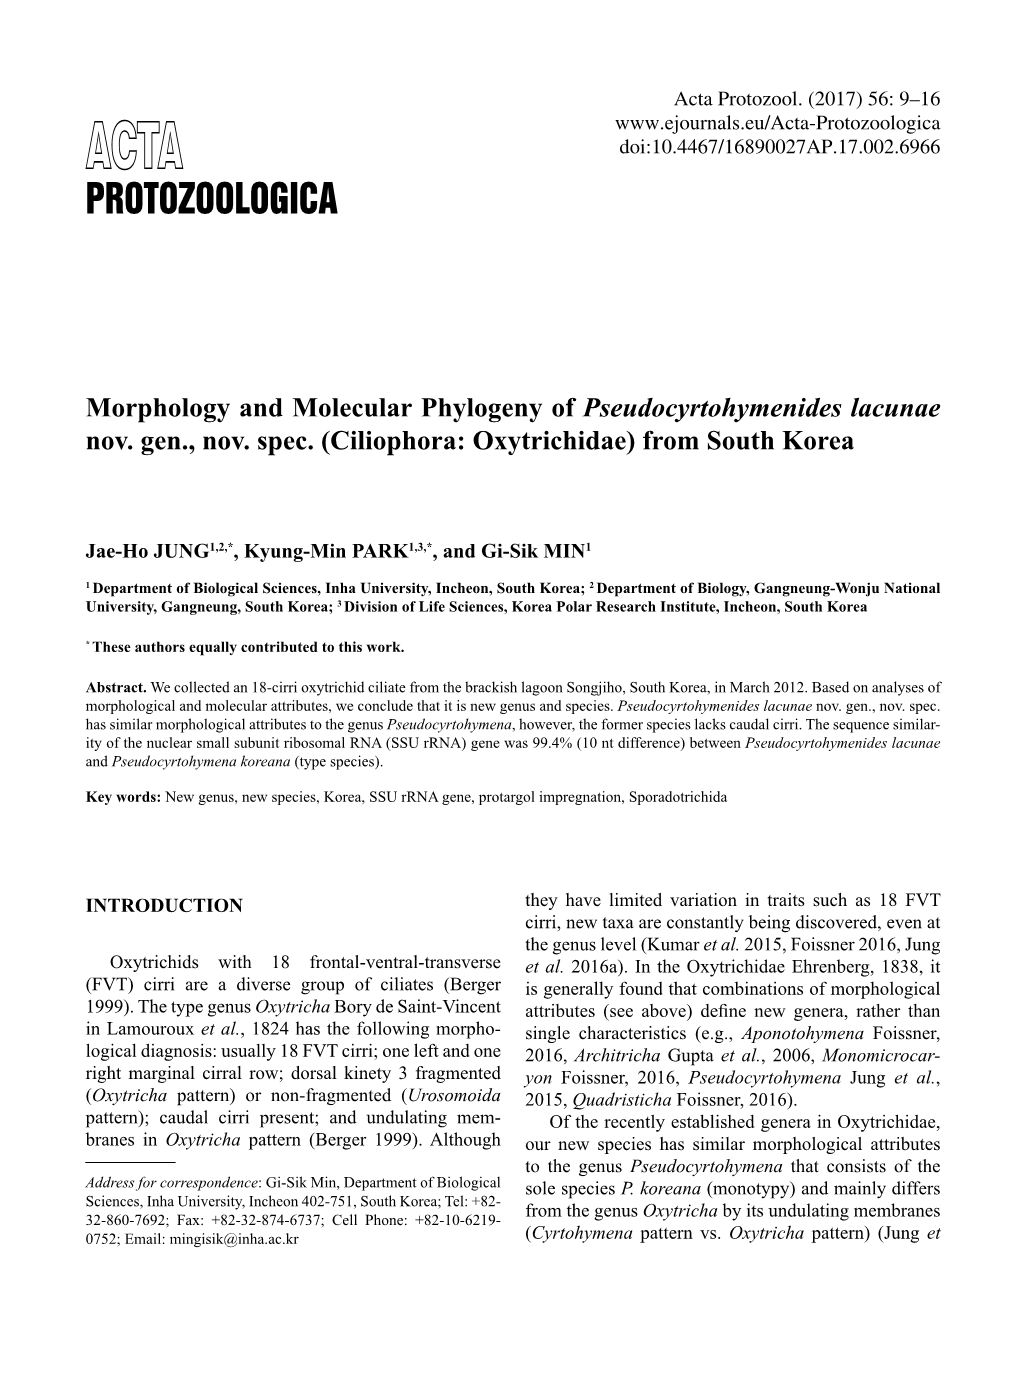 Morphology and Molecular Phylogeny of Pseudocyrtohymenides Lacunae Nov